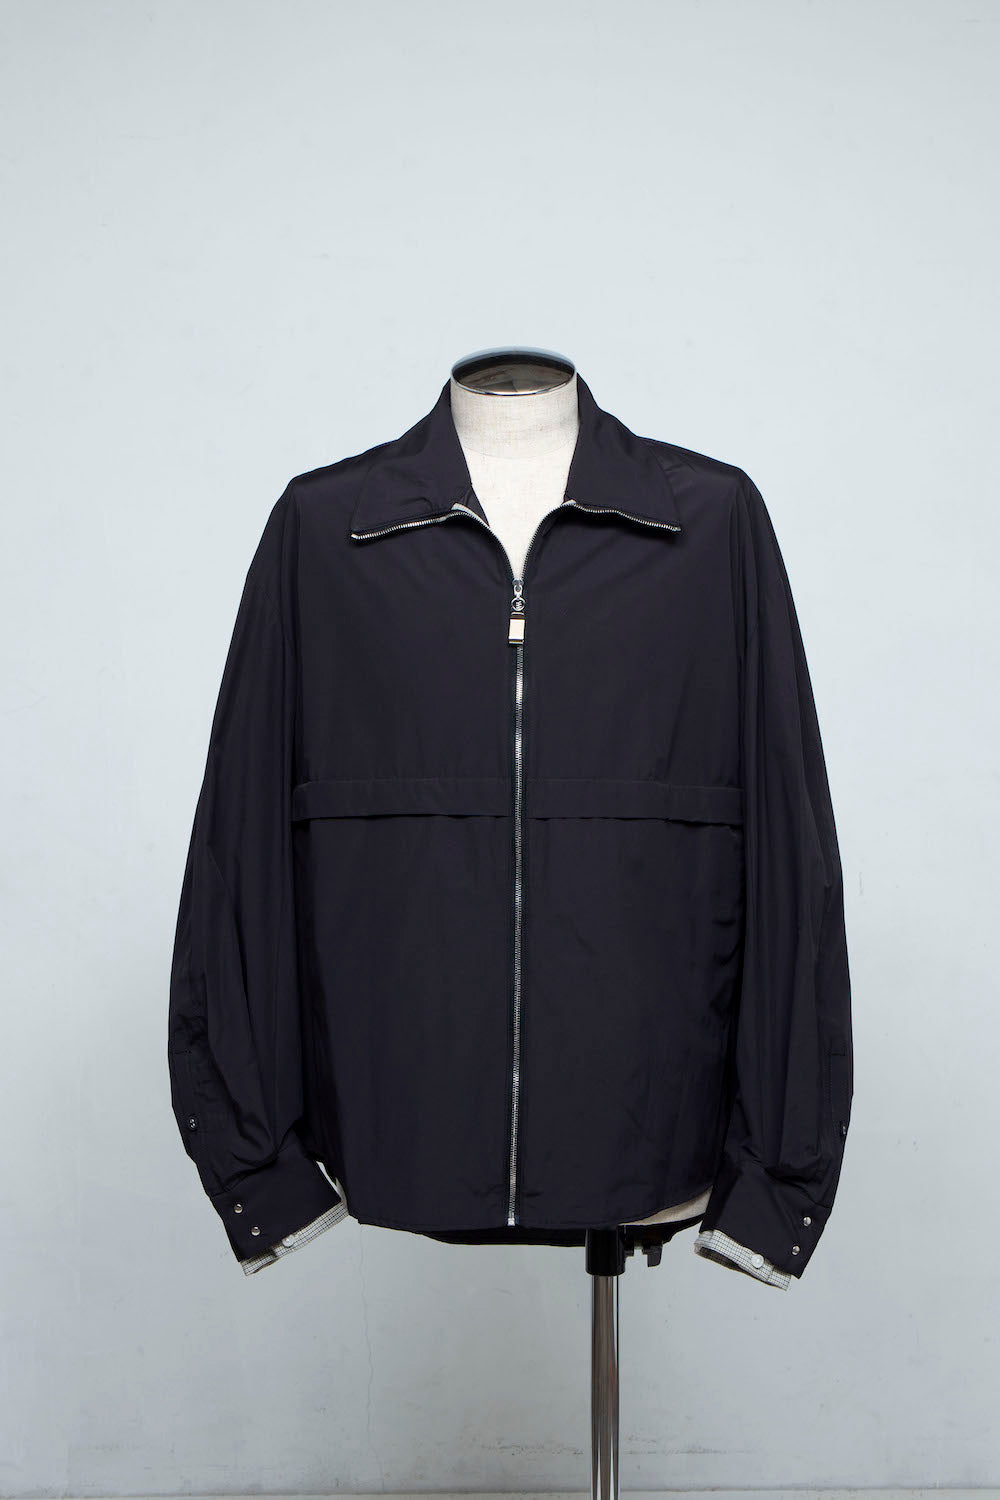 LB24SS-SHBL01-TFT | パウダータッチタフタトラックシャツジャケット | BLACK